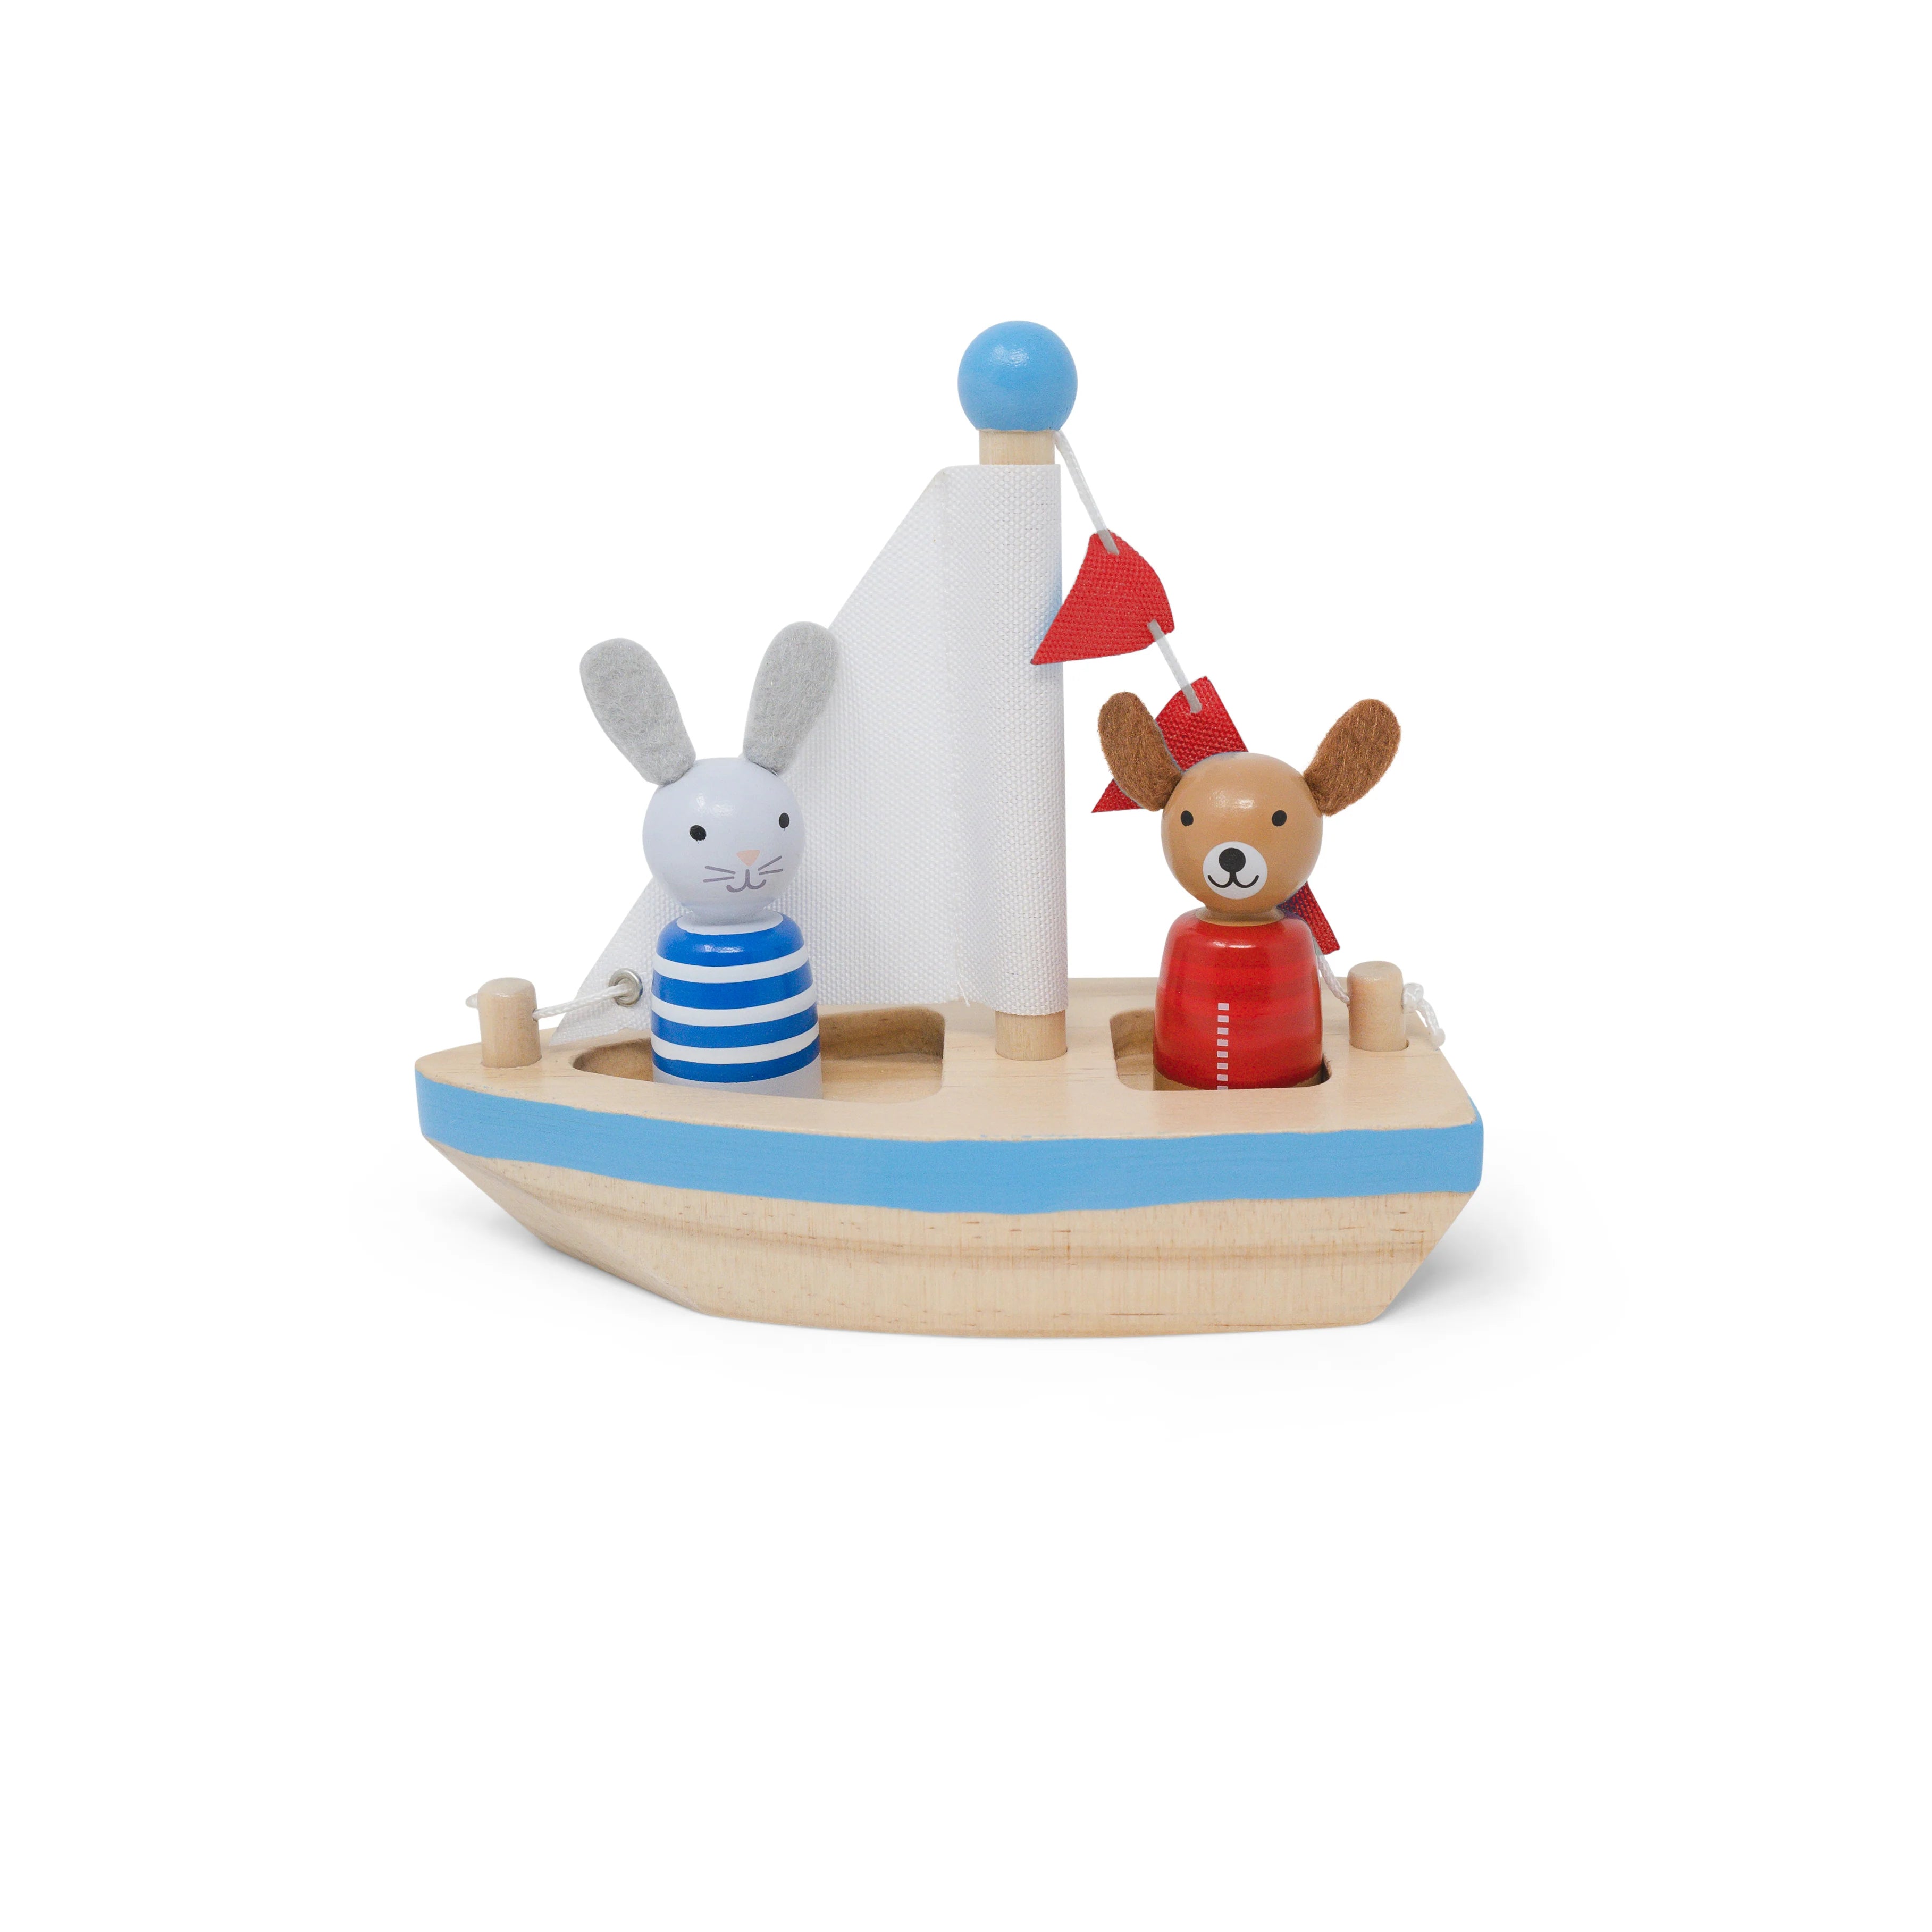 Boats & Buddies Bath Toy - Dog & Bunny | Jack Rabbit Creations